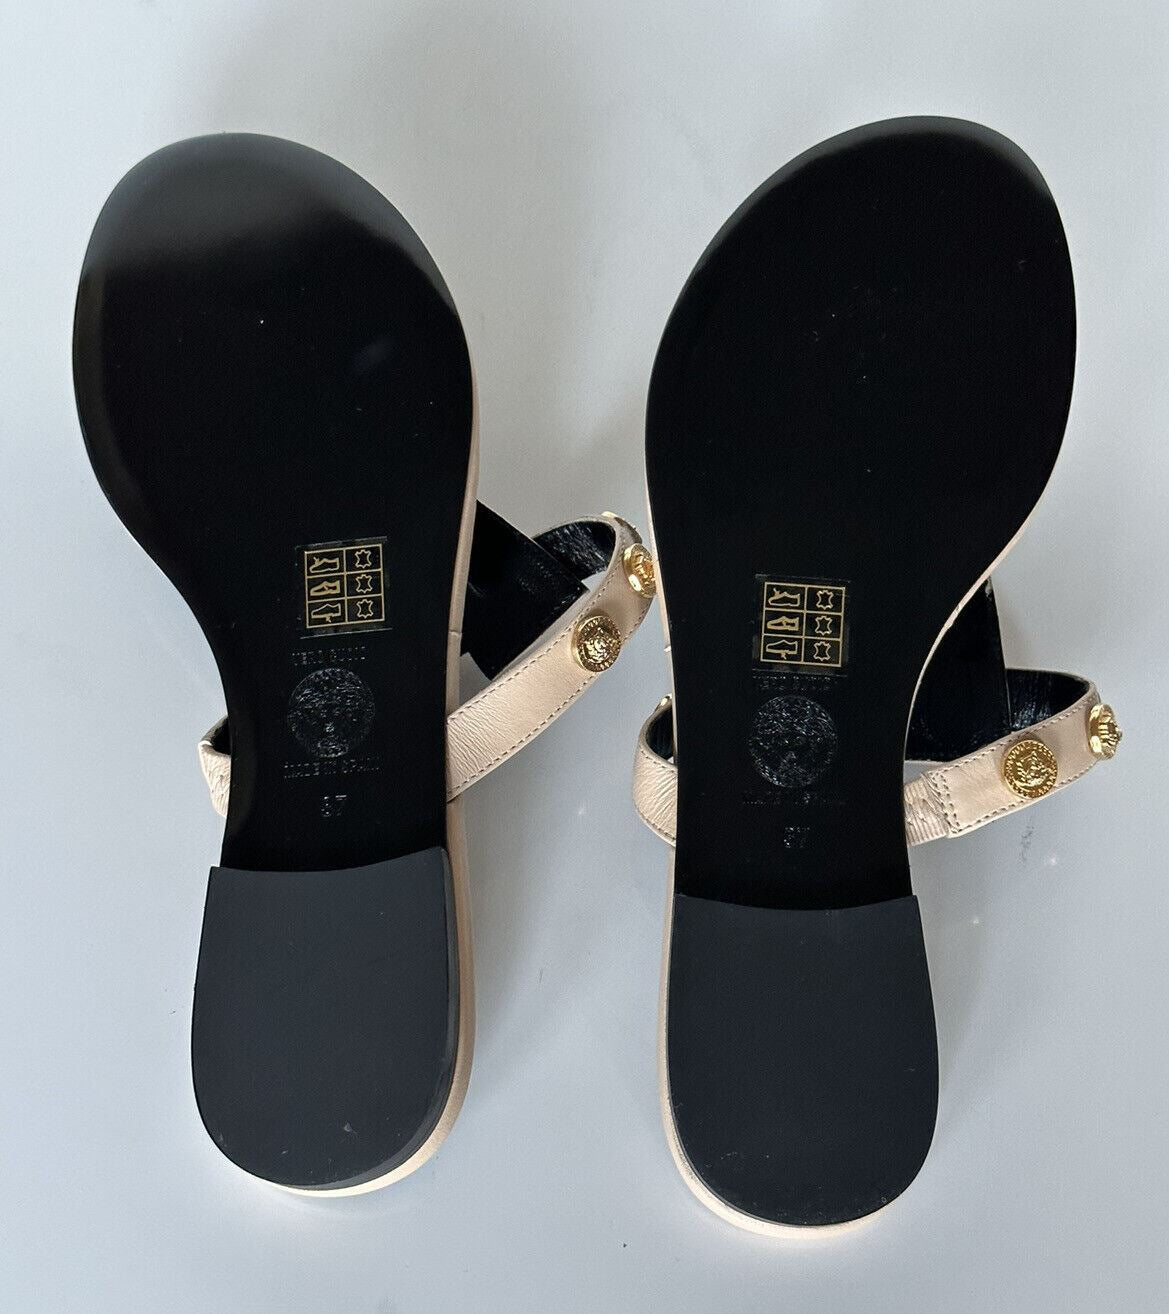 NIB $850 VERSACE Medusa Women's Beige Sandals 7 US (37 Euro) DST669CS Spain